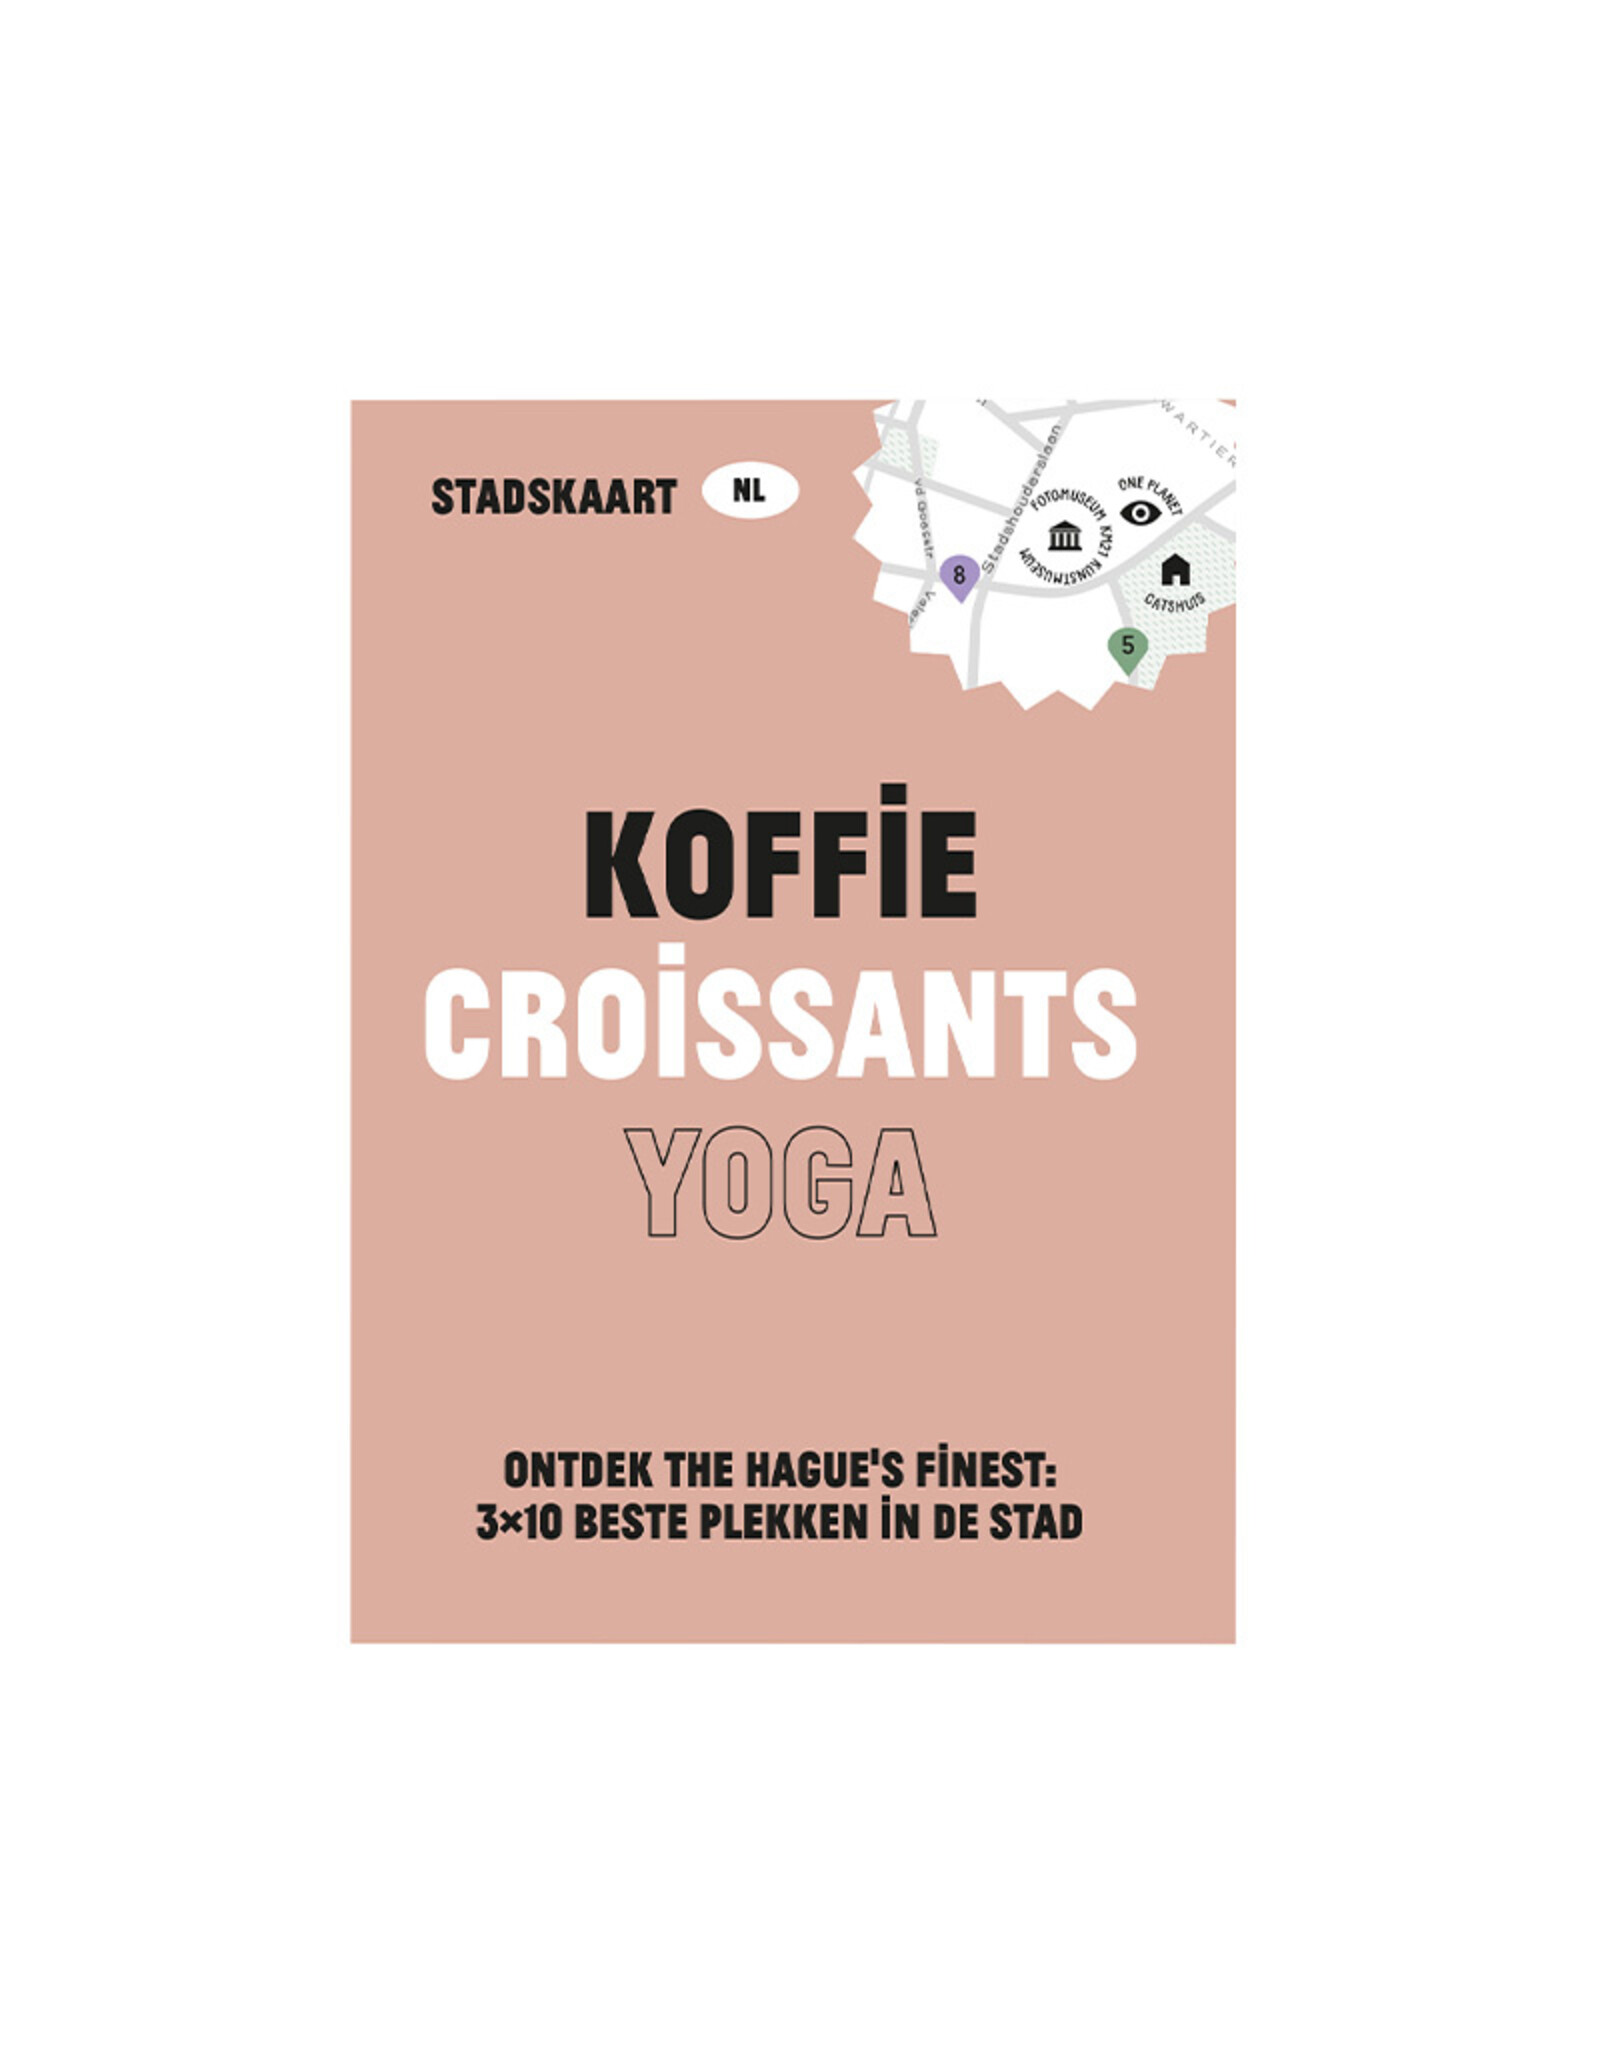 The Hague's Finest Stadskaart: koffie, croissants & yoga